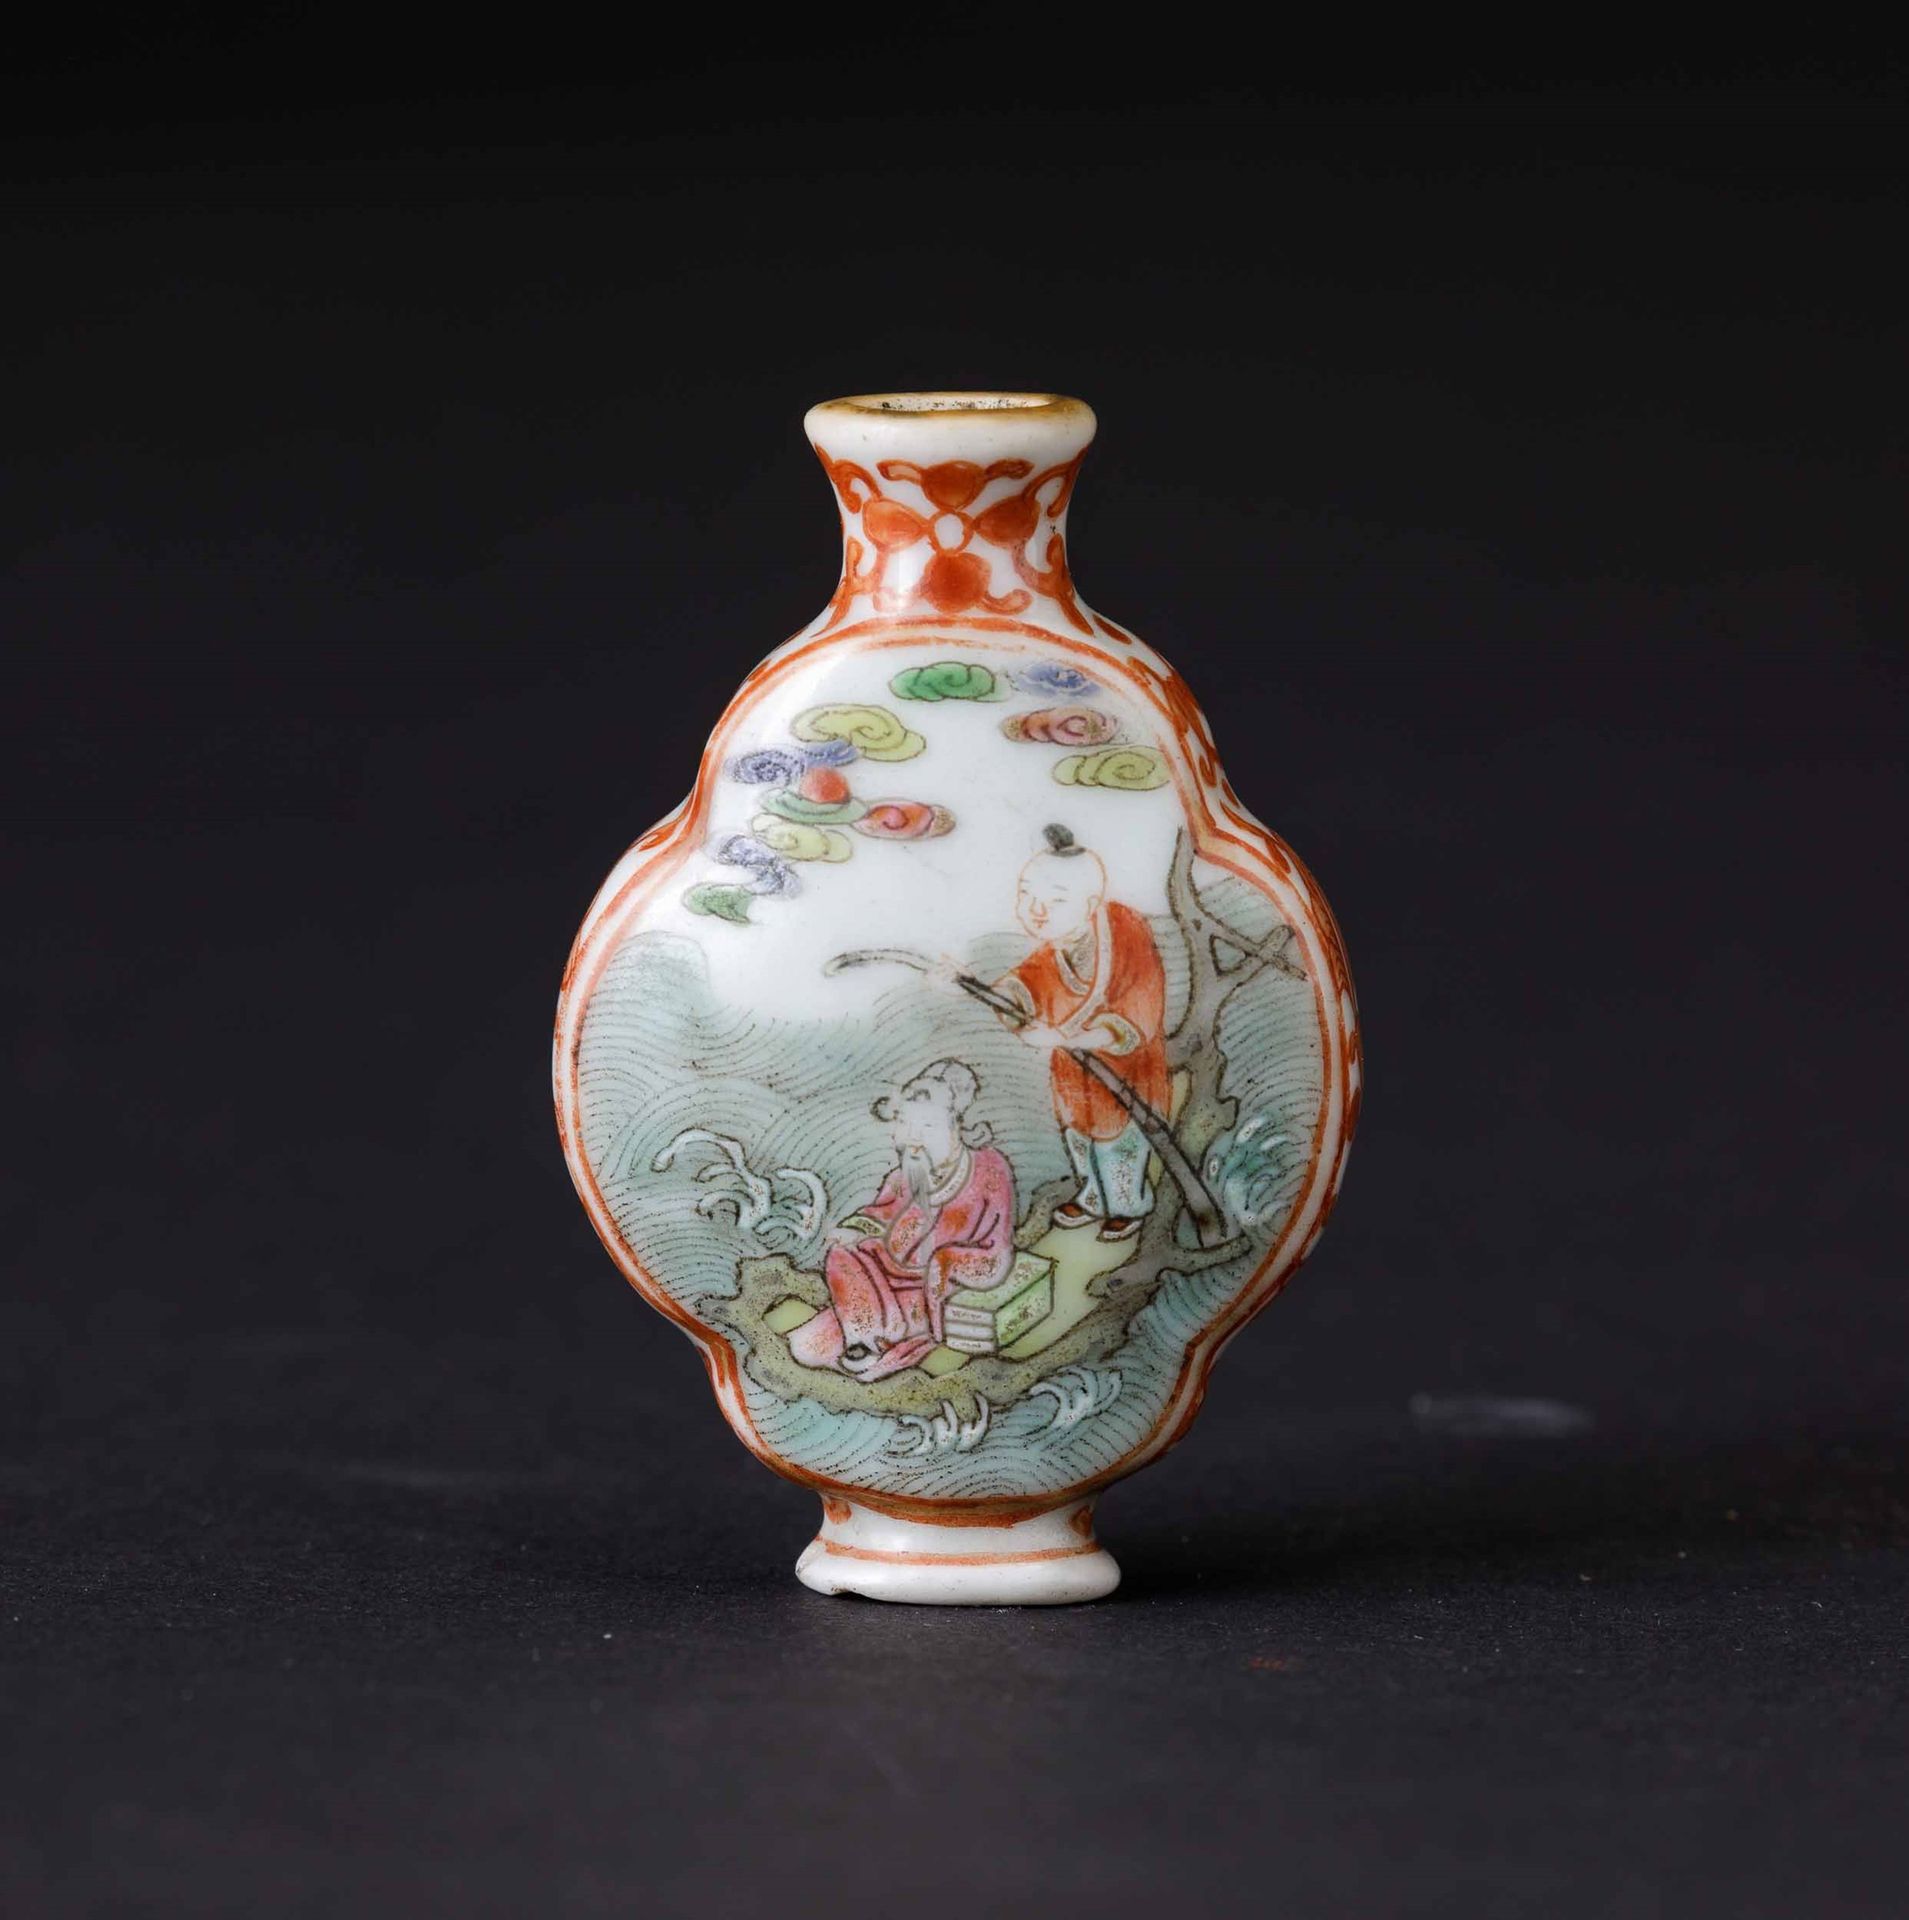 A porcelain snuff bottle, China, Qing Dynasty Période Jiaqing (1796-1820). H 6cm